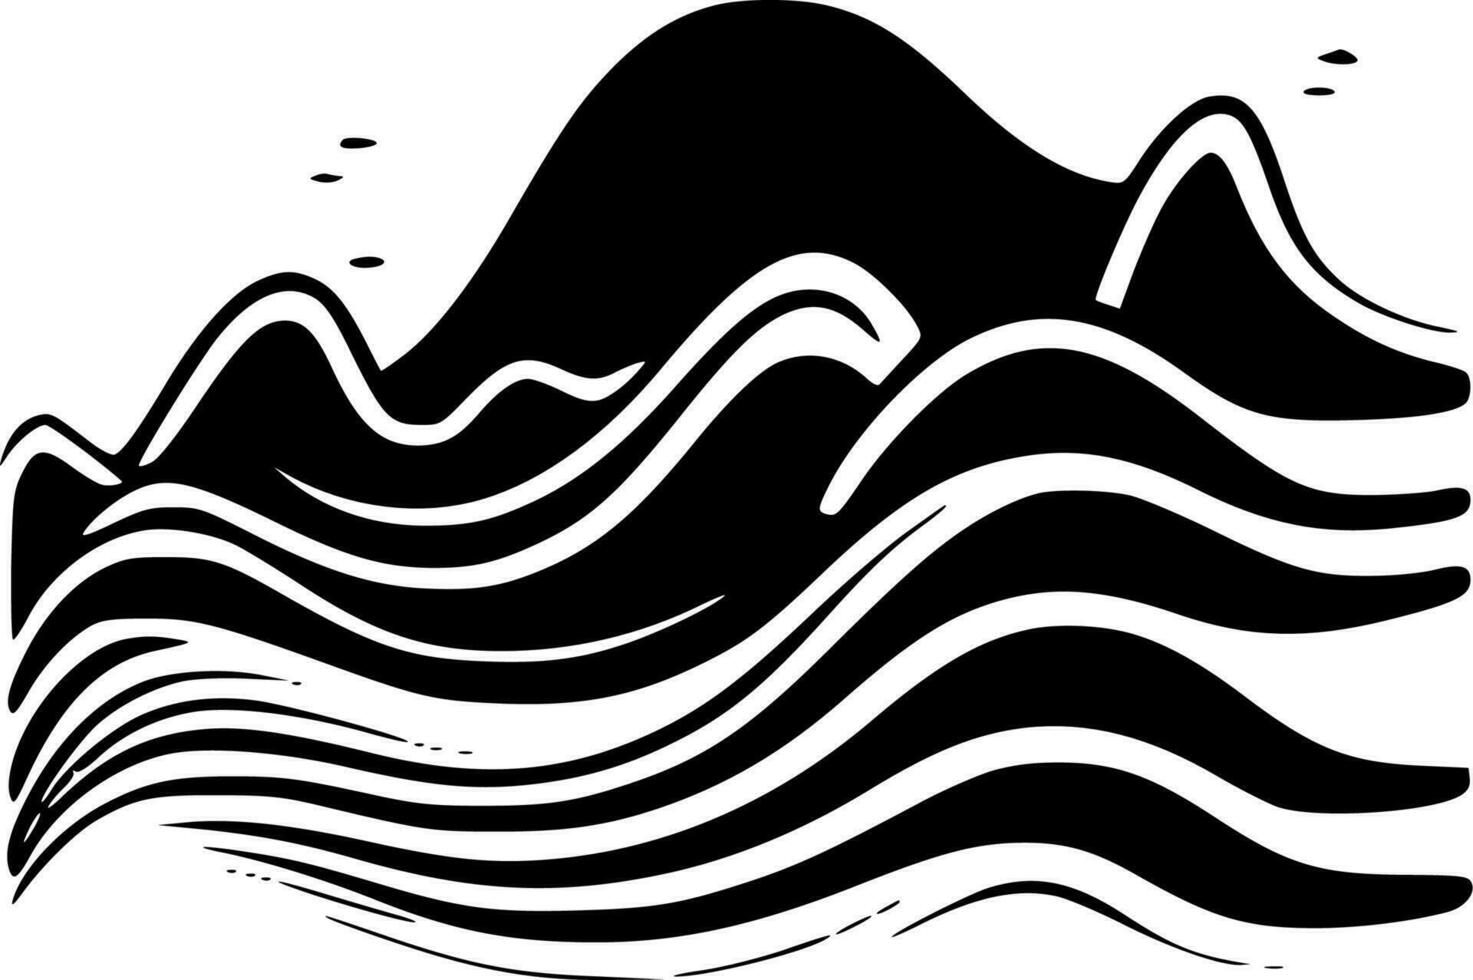 ondas - minimalista e plano logotipo - vetor ilustração